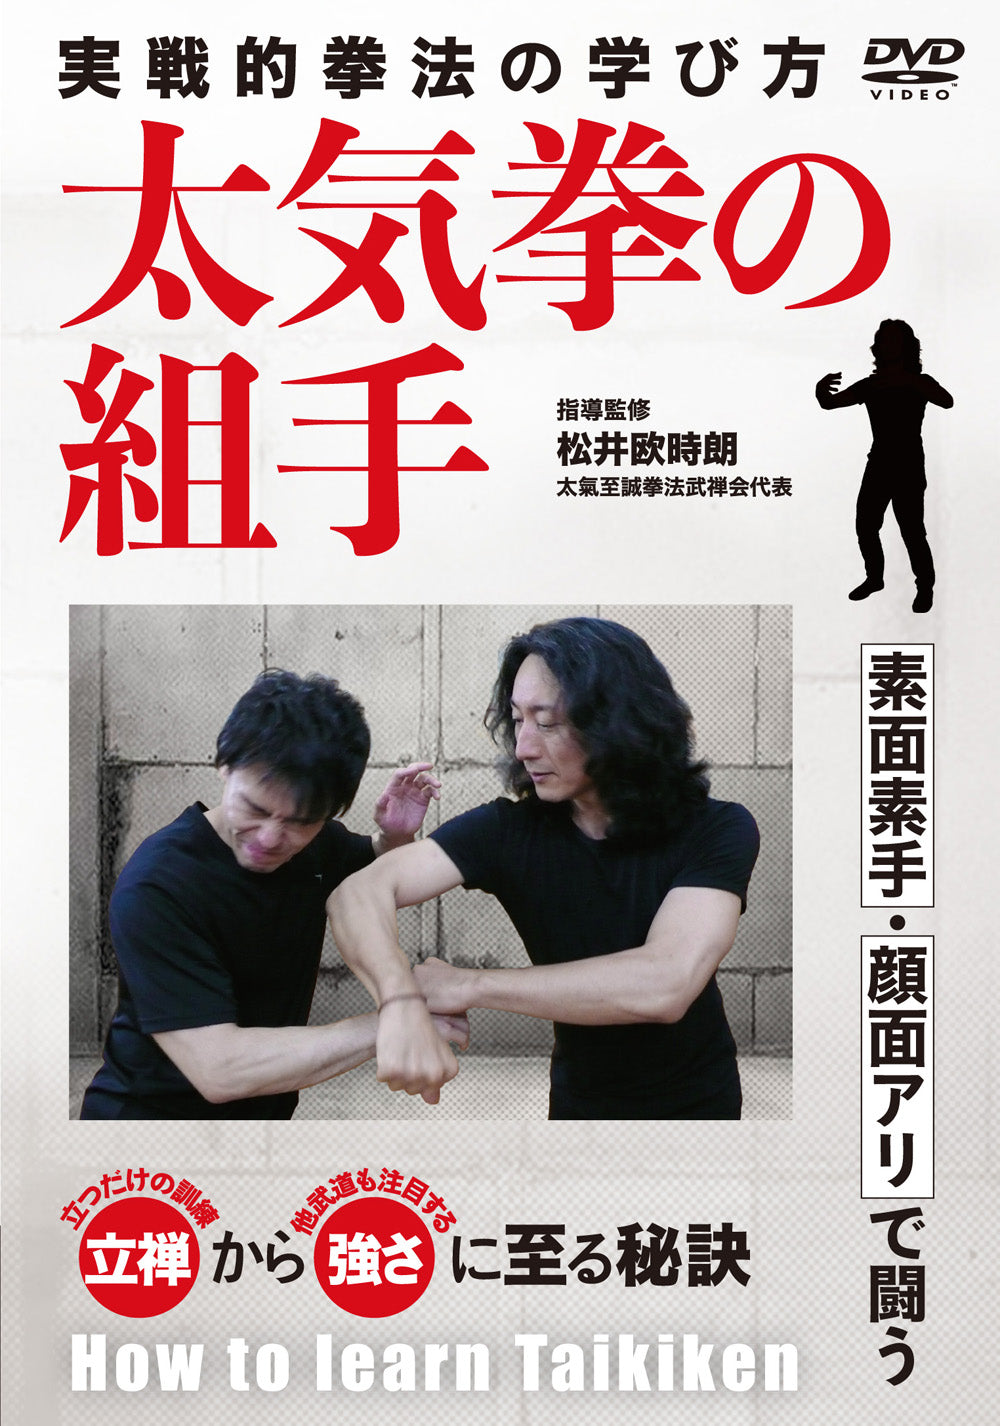 Yawaragi Samurai Method To Improve Performance DVD By Naoyuki 